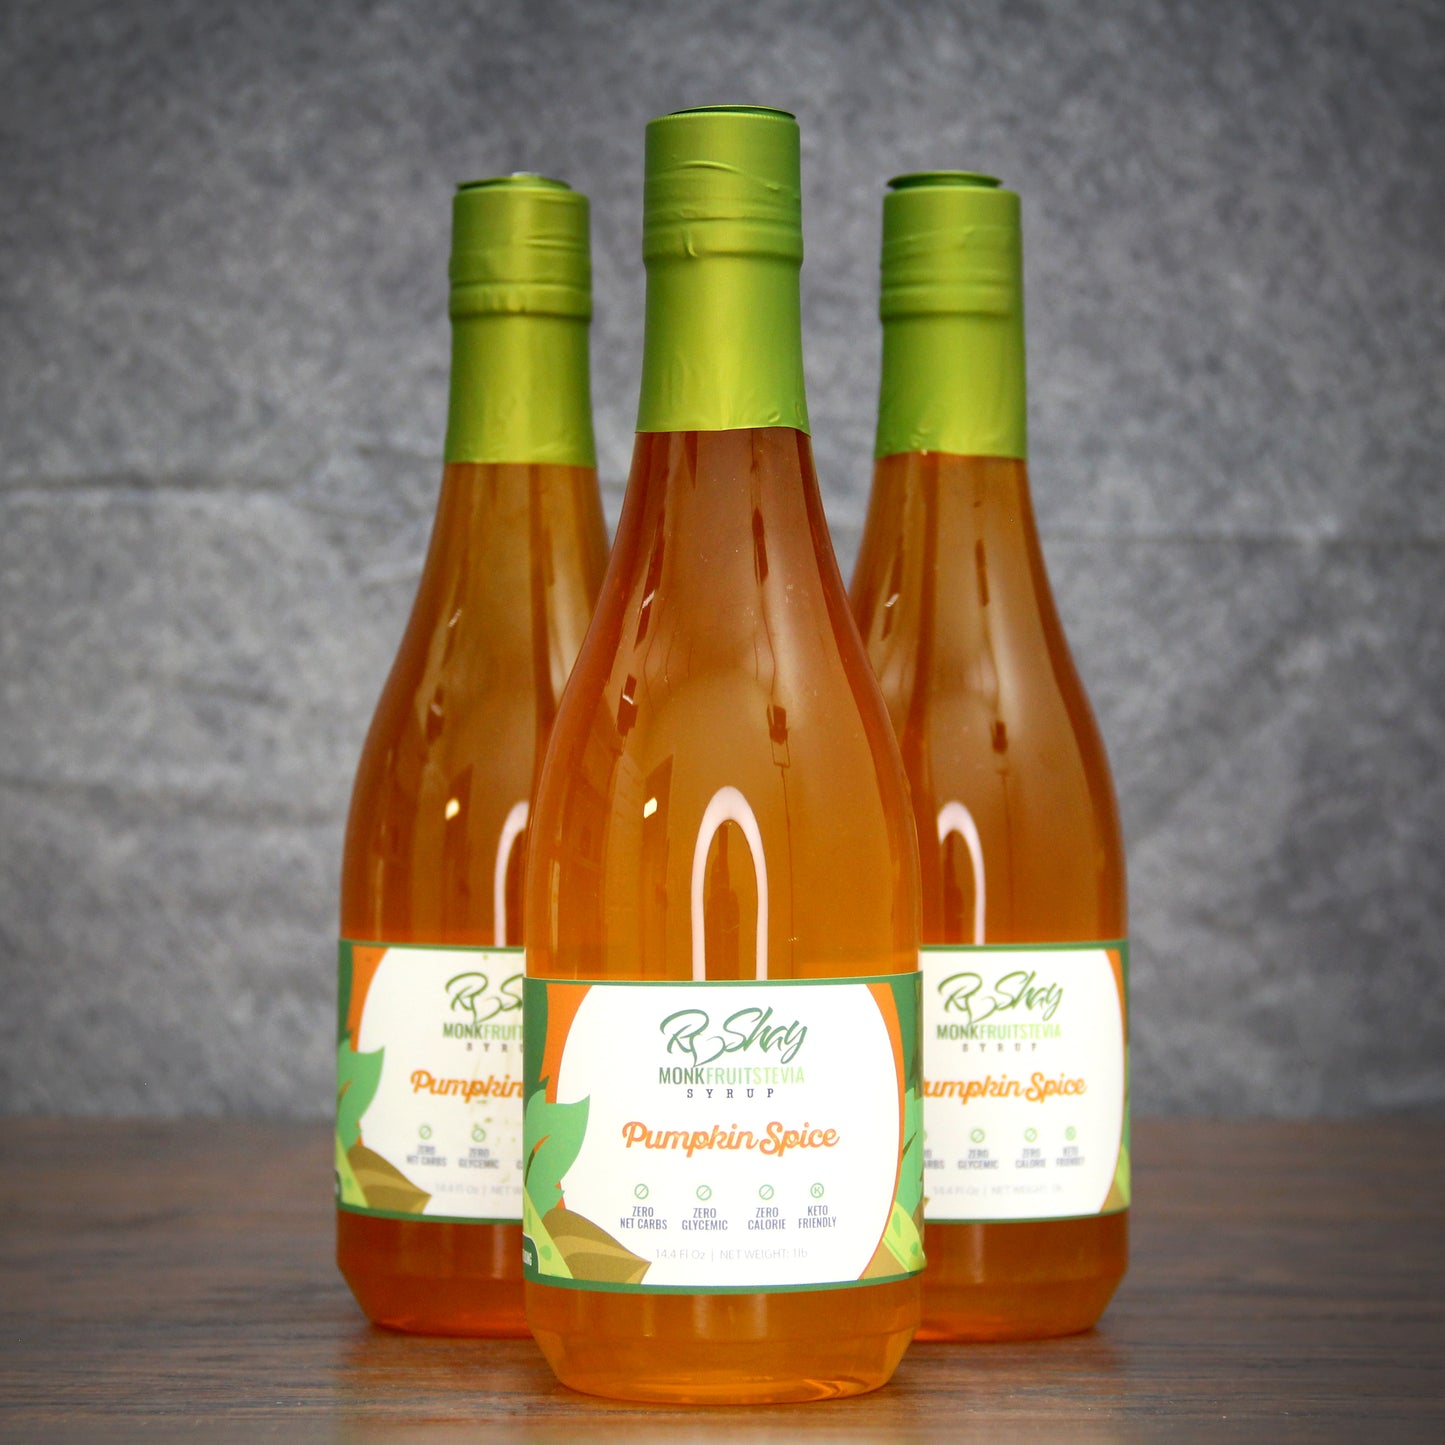 RoShay Pumpkin Spice Monk Fruit Flavoring Syrup | 14oz | Sugar Free